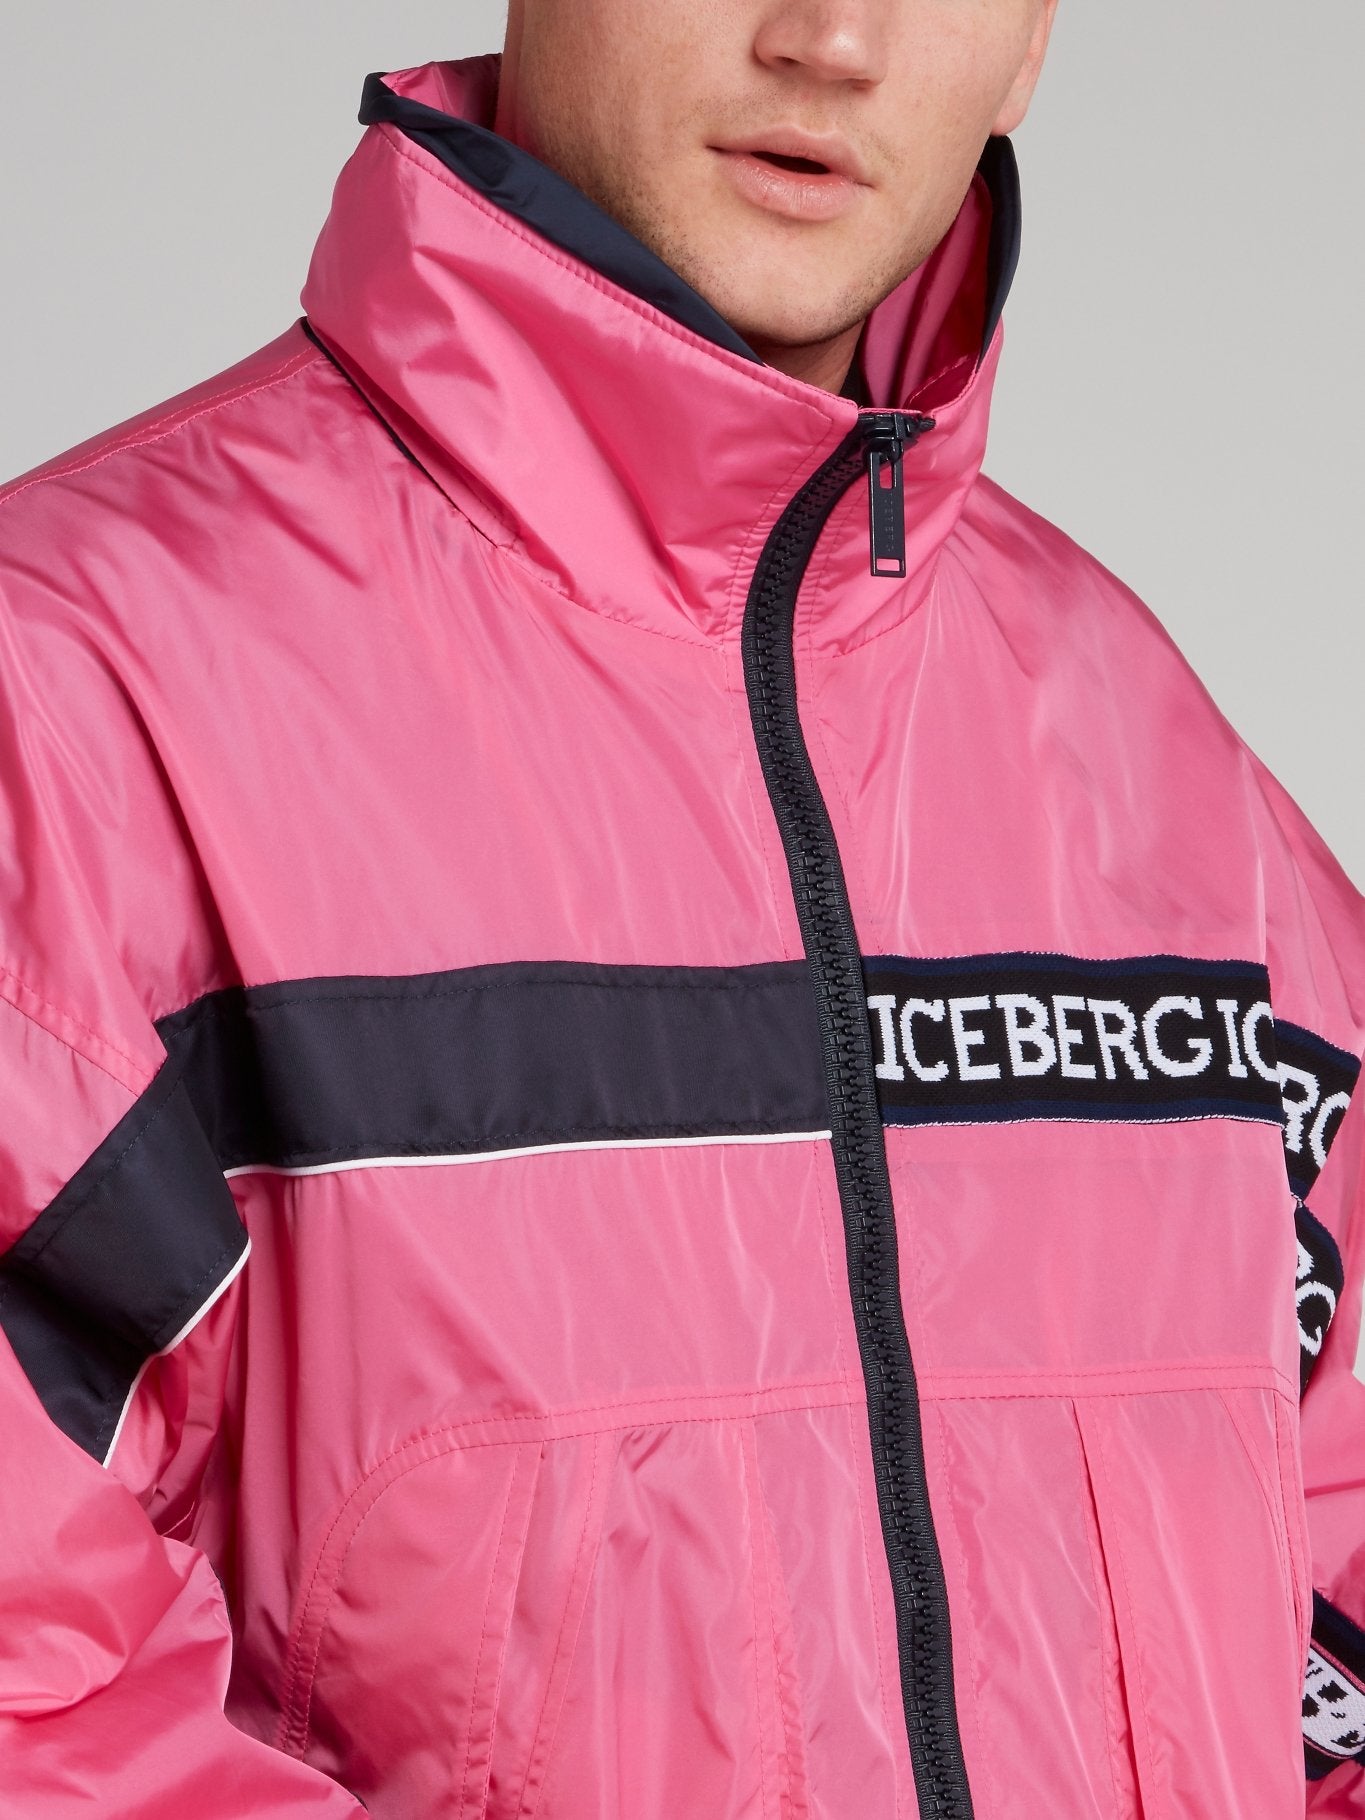 Pink Nylon Sports Jacket